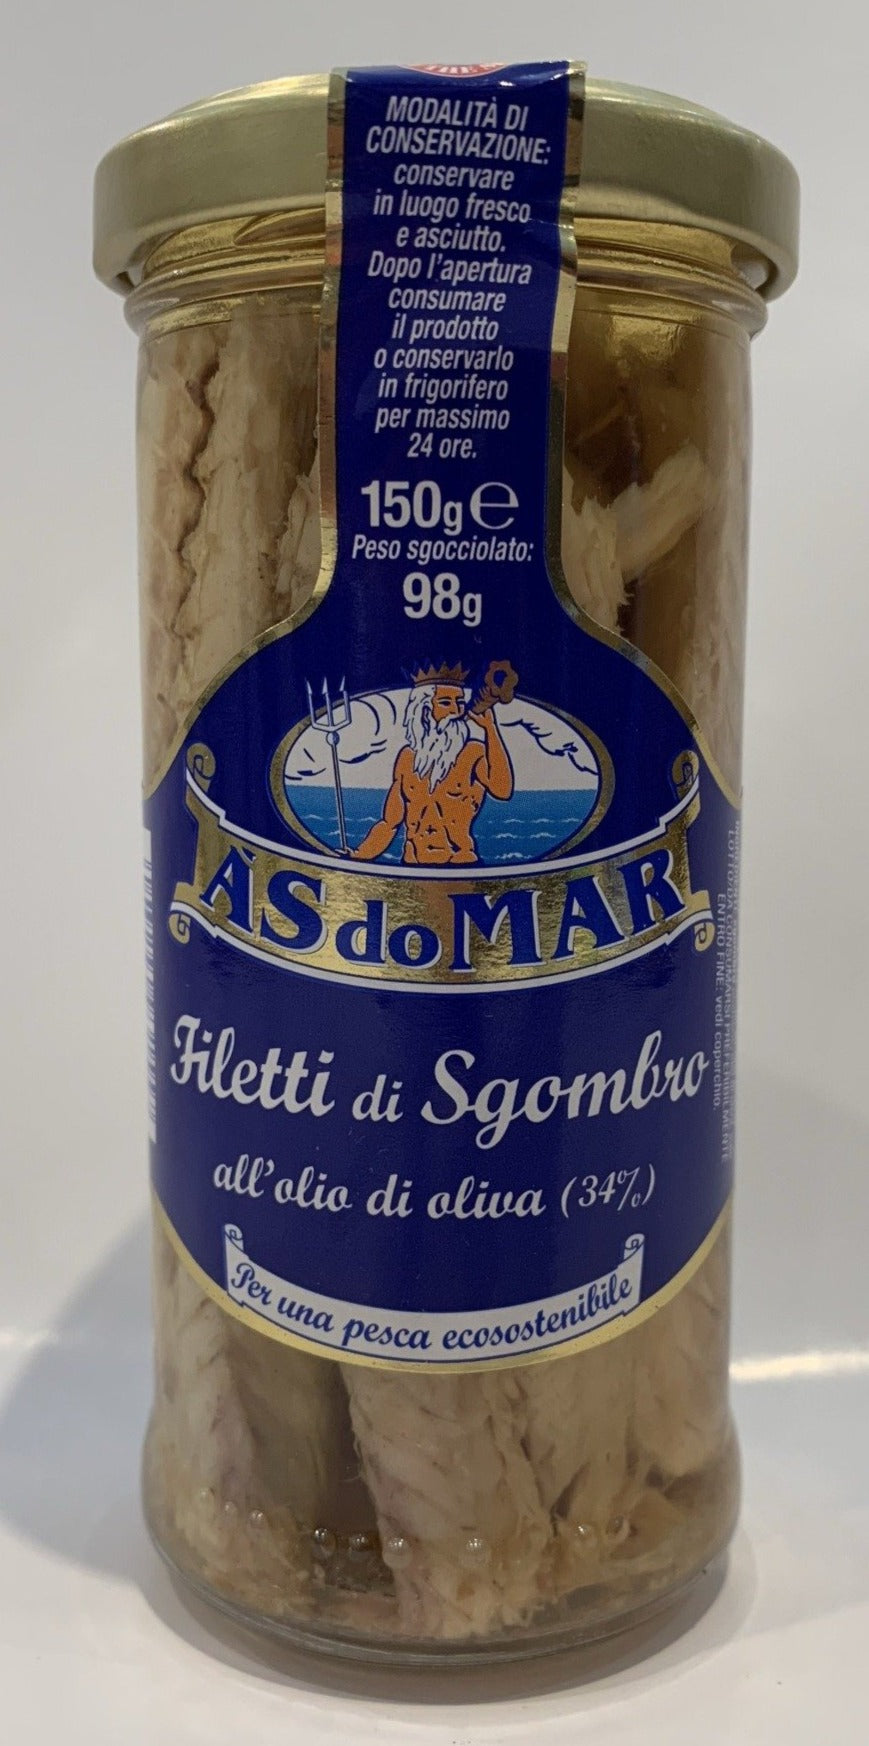 AS do MAR - Filetti Di Sgombro - 150g (5.29 oz)